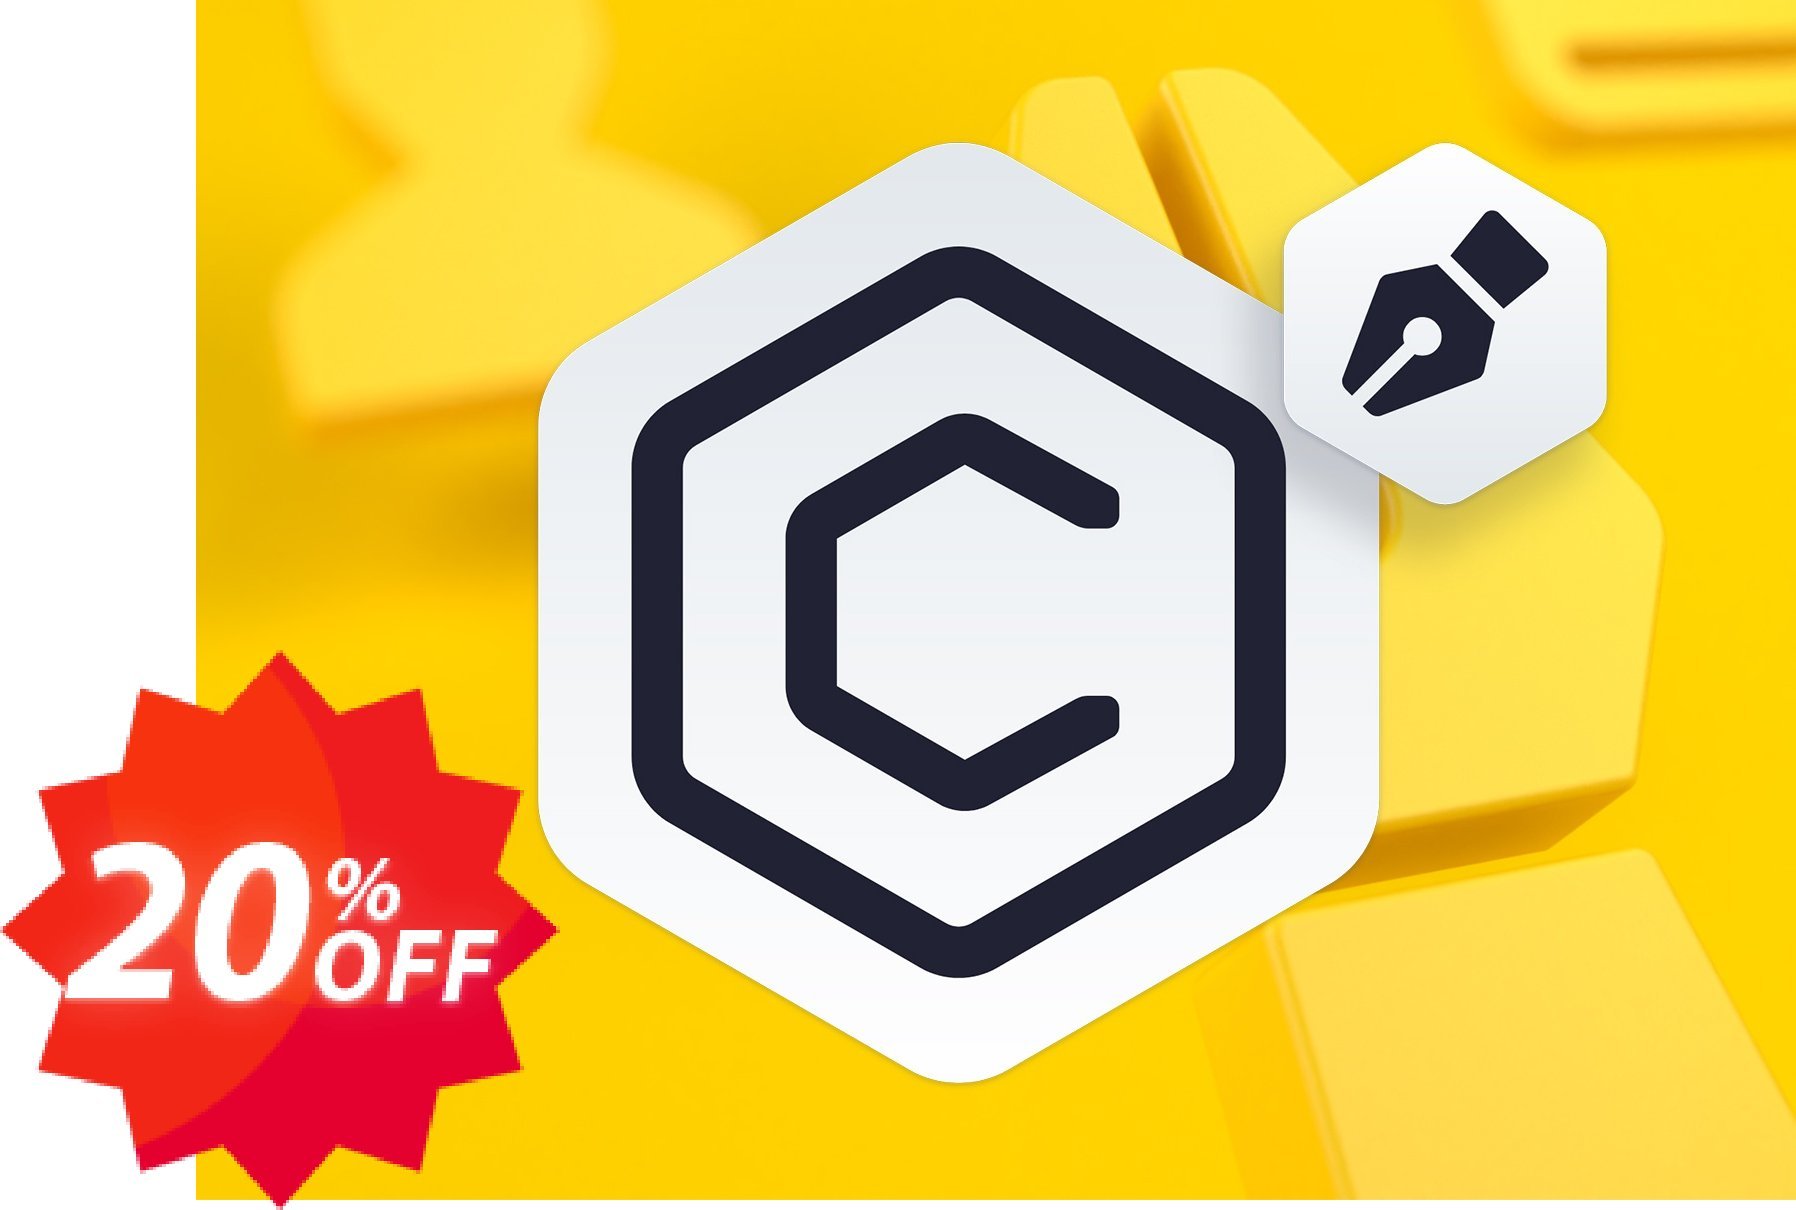 CoreUI Icons PRO Coupon code 20% discount 